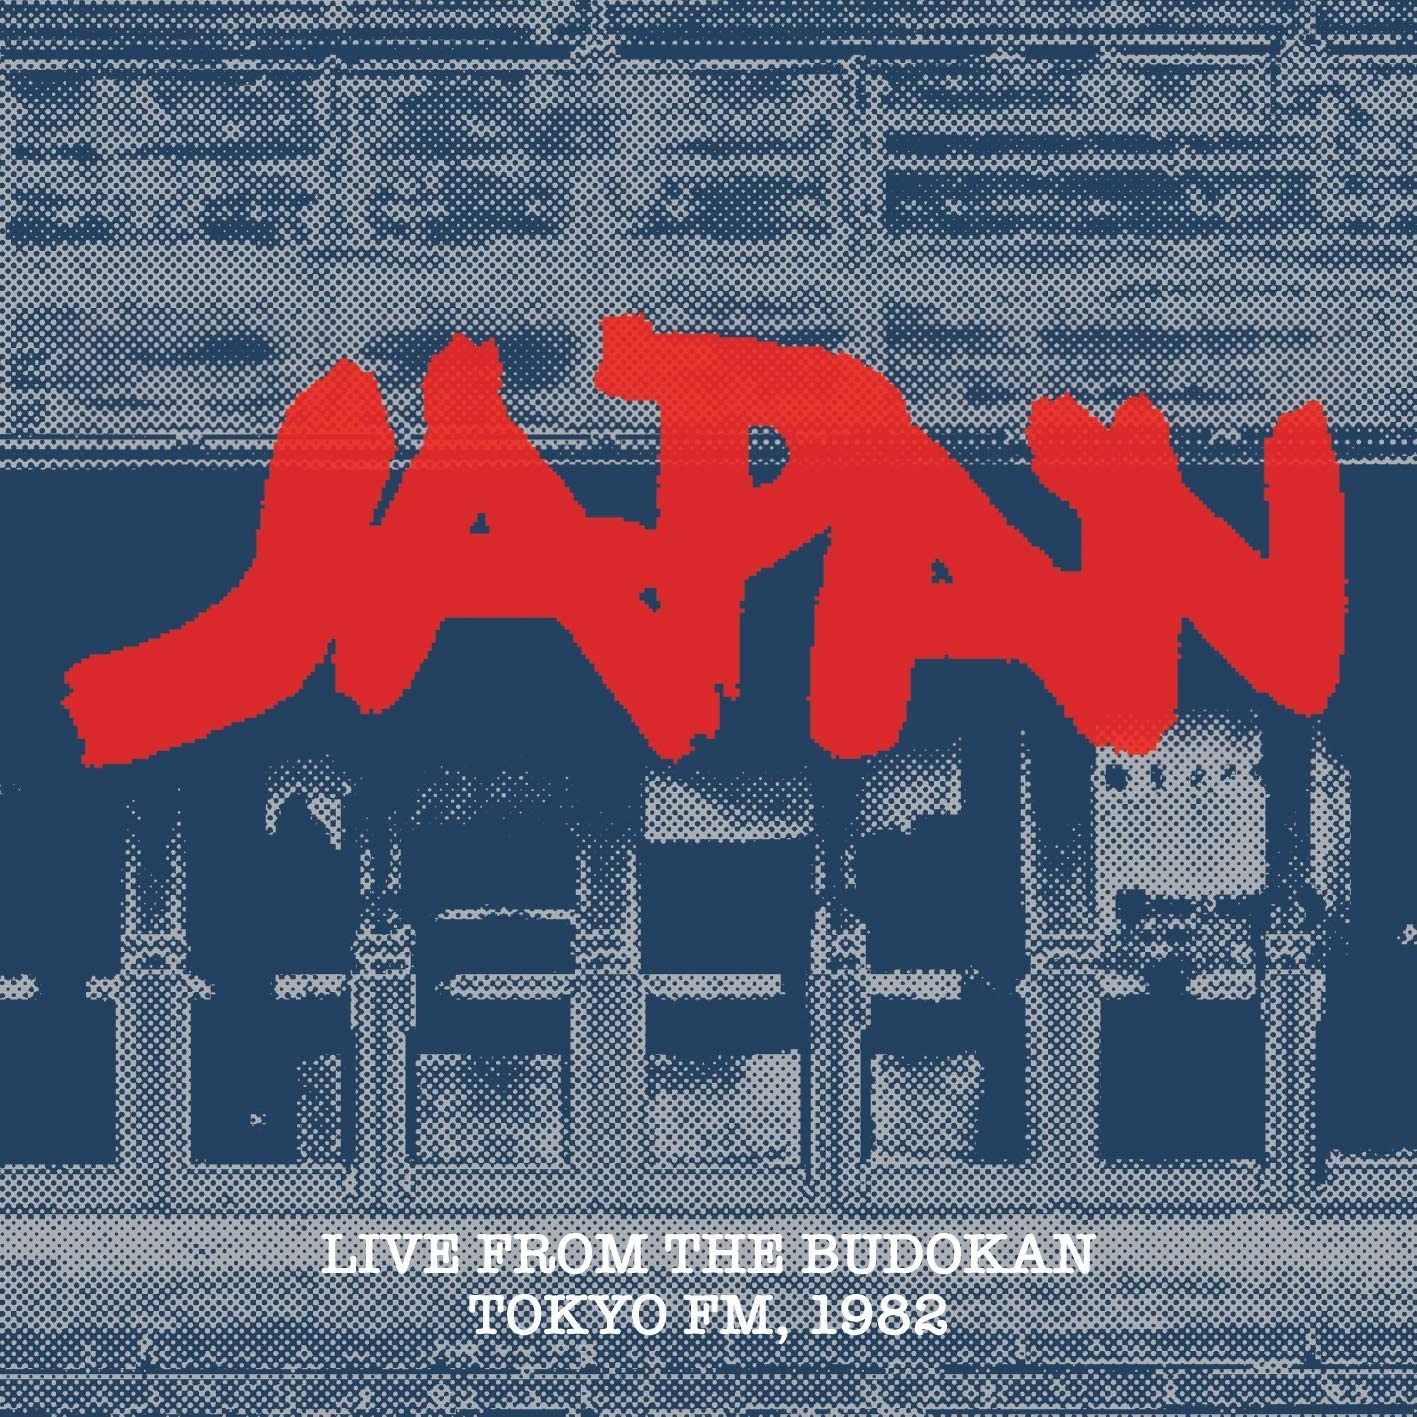 Japan - From The Budokan Tokyo Fm 1982 - 2CD